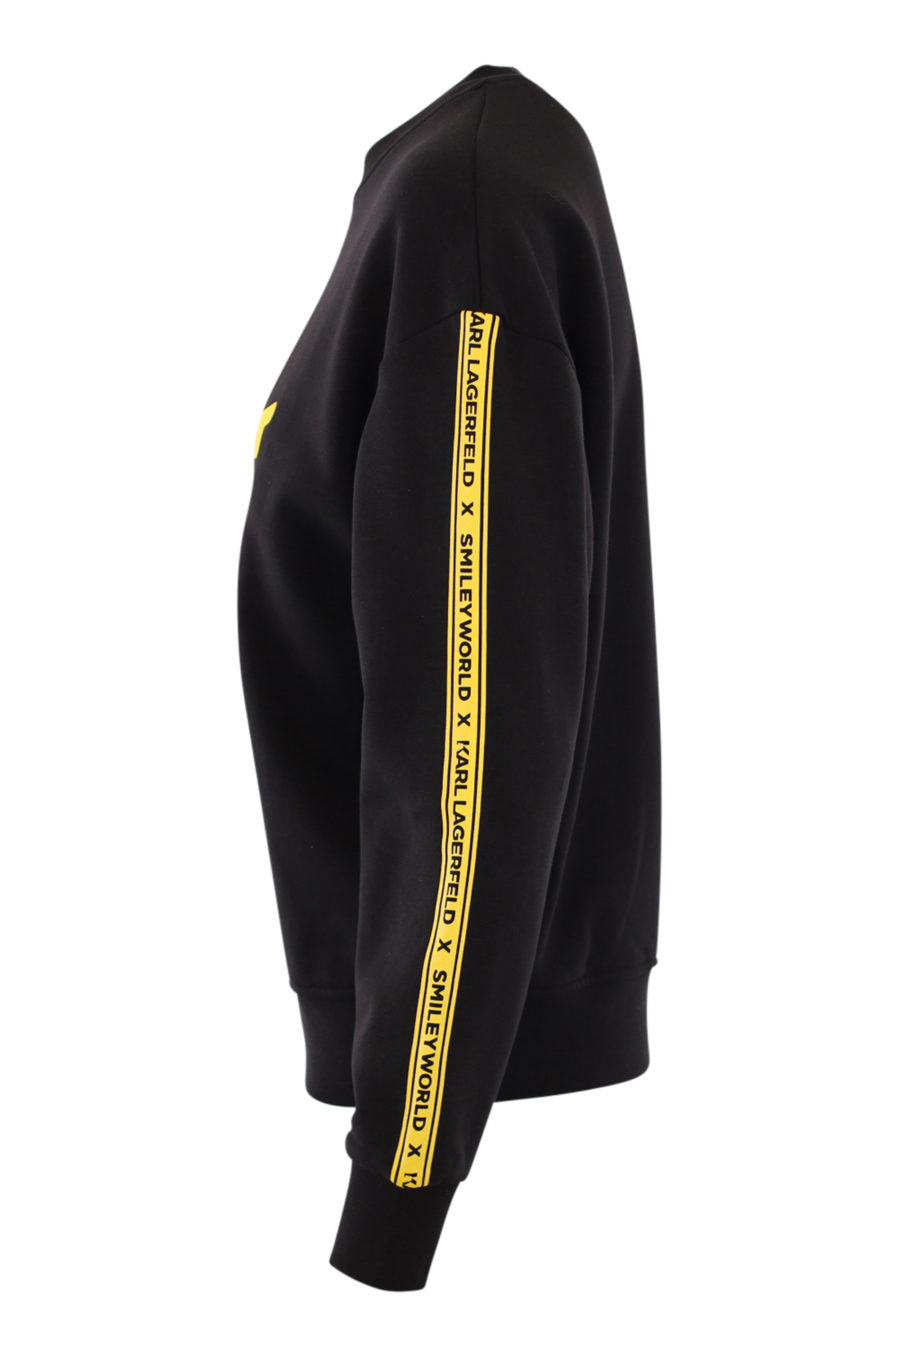 C.P. Company - Pantalón de chándal negro con bolsillos laterales y logo  lente - BLS Fashion